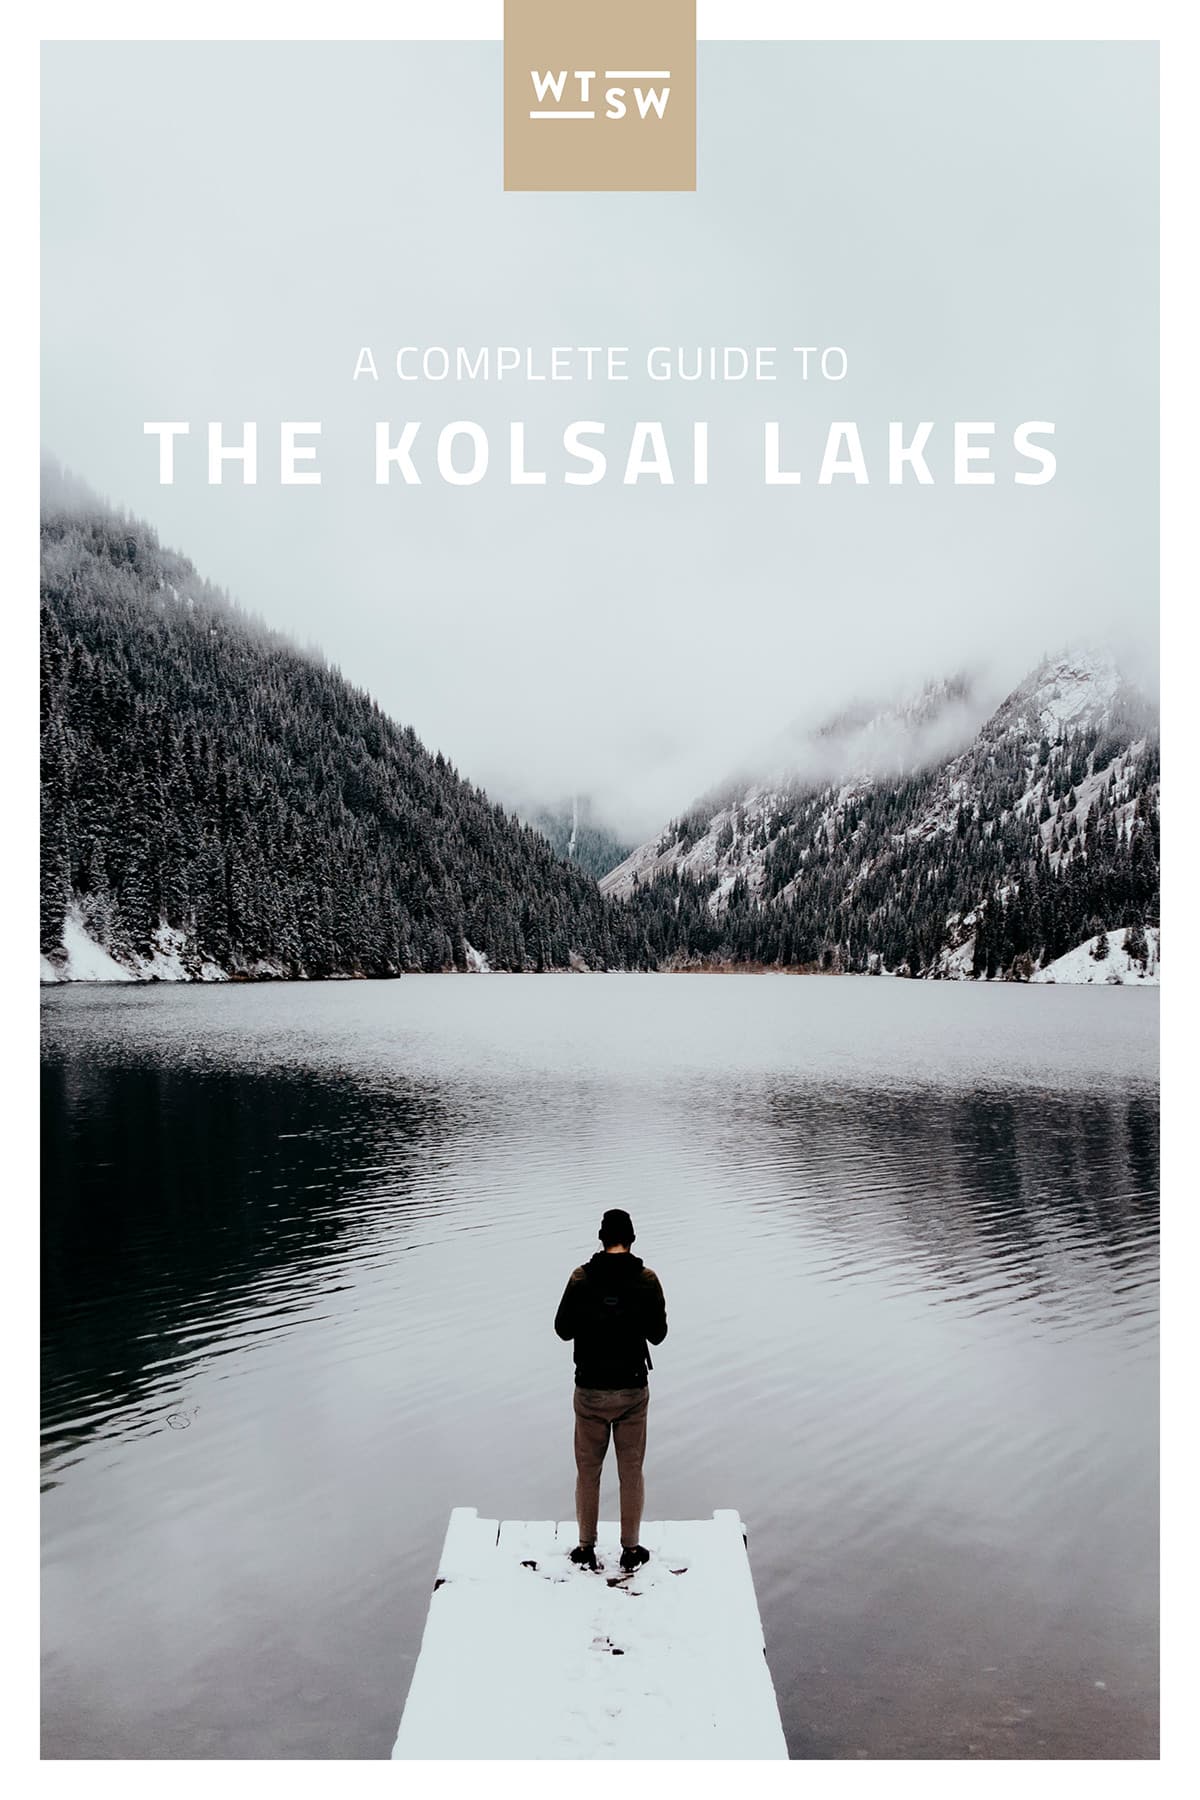 A guide to the Kolsai Lakes